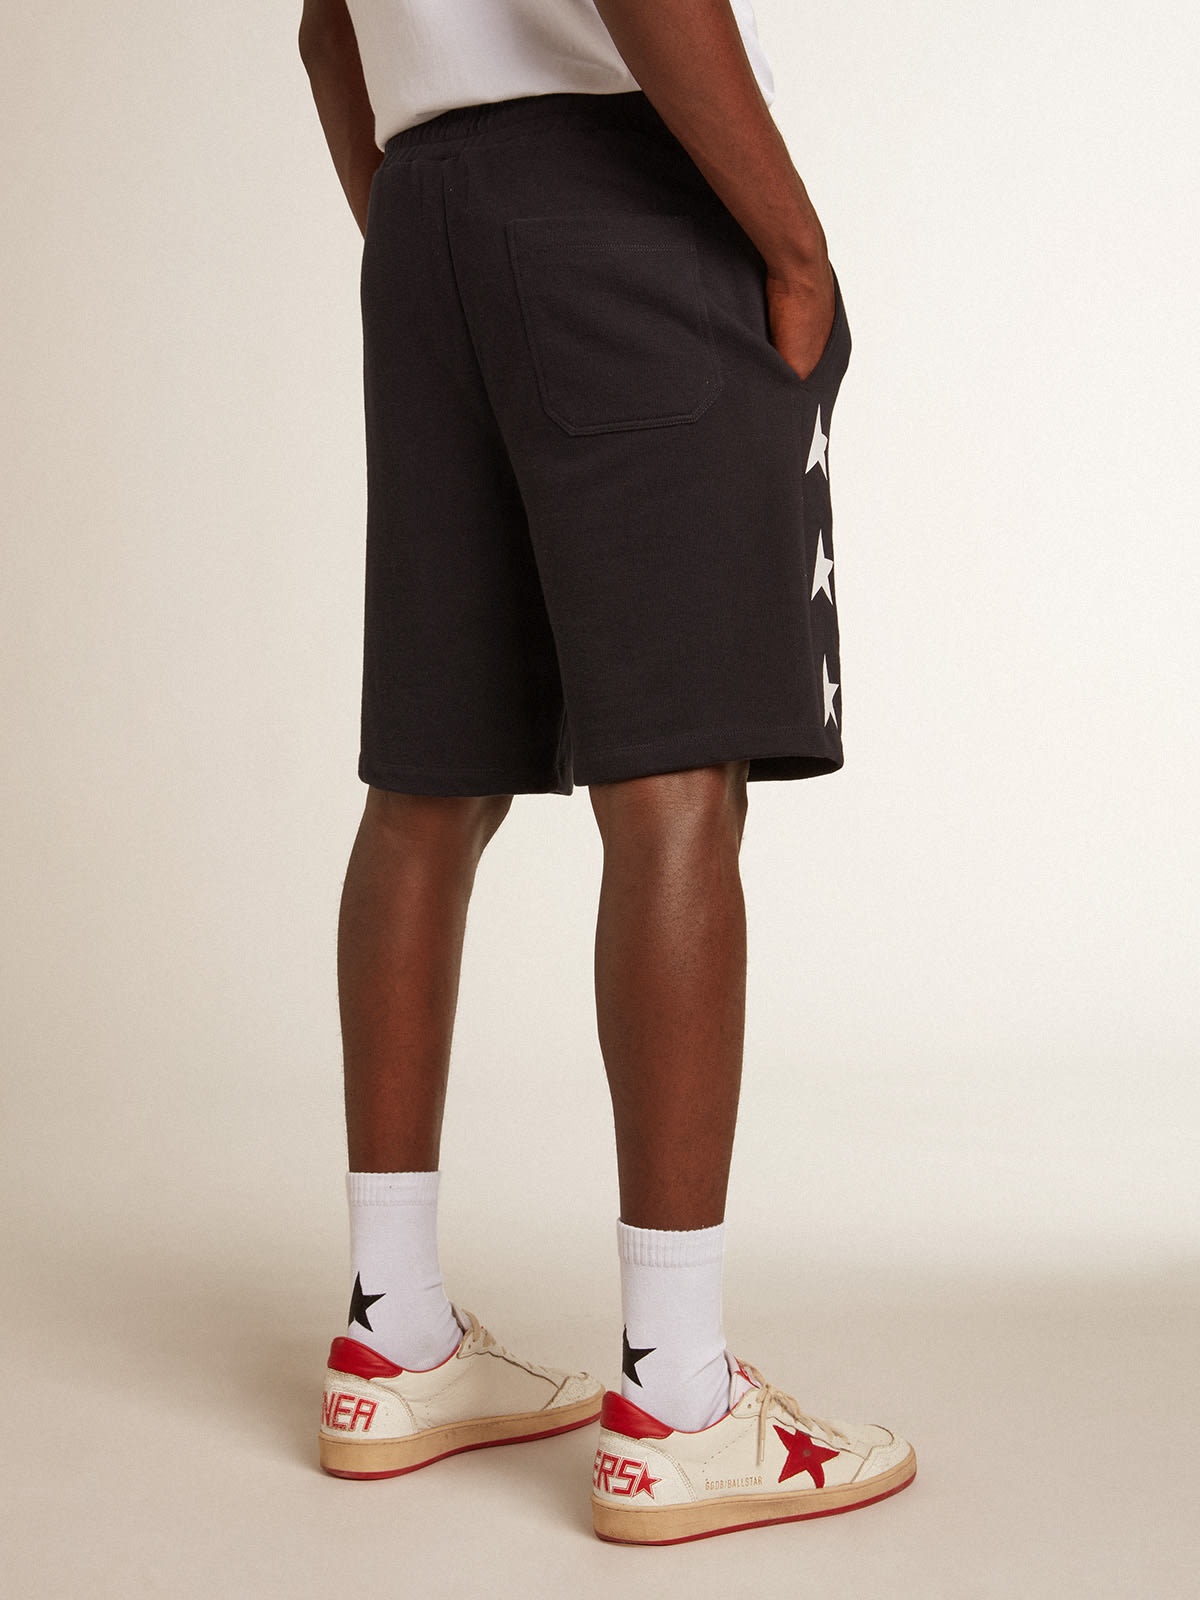 Men's black bermuda shorts with white stars - 4